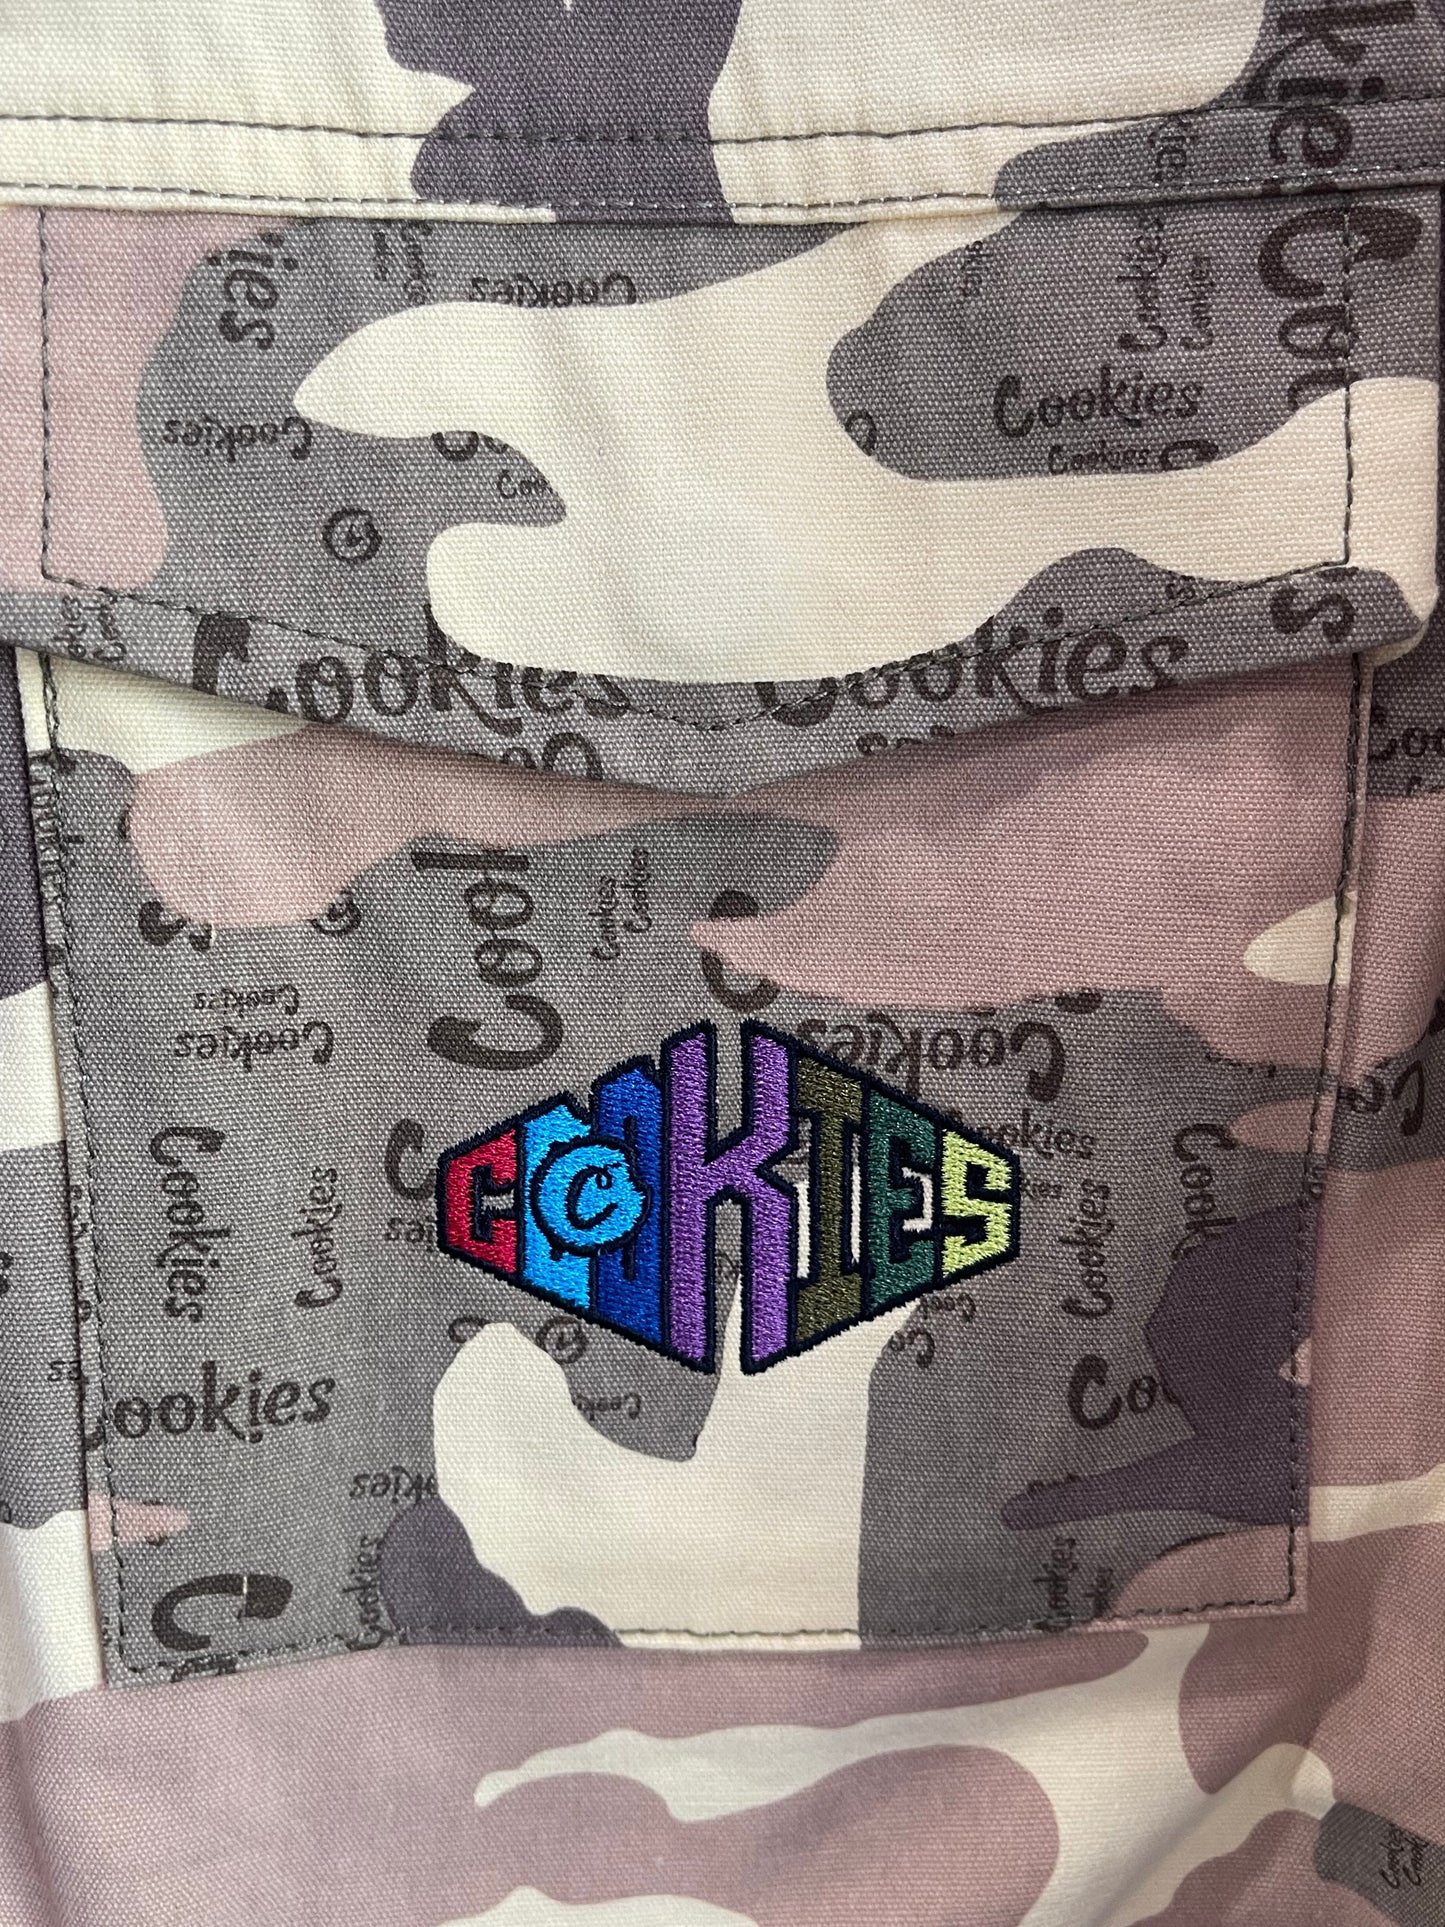 Cookies SF "Across The Border" cotton/canvas contrast camo jacket.